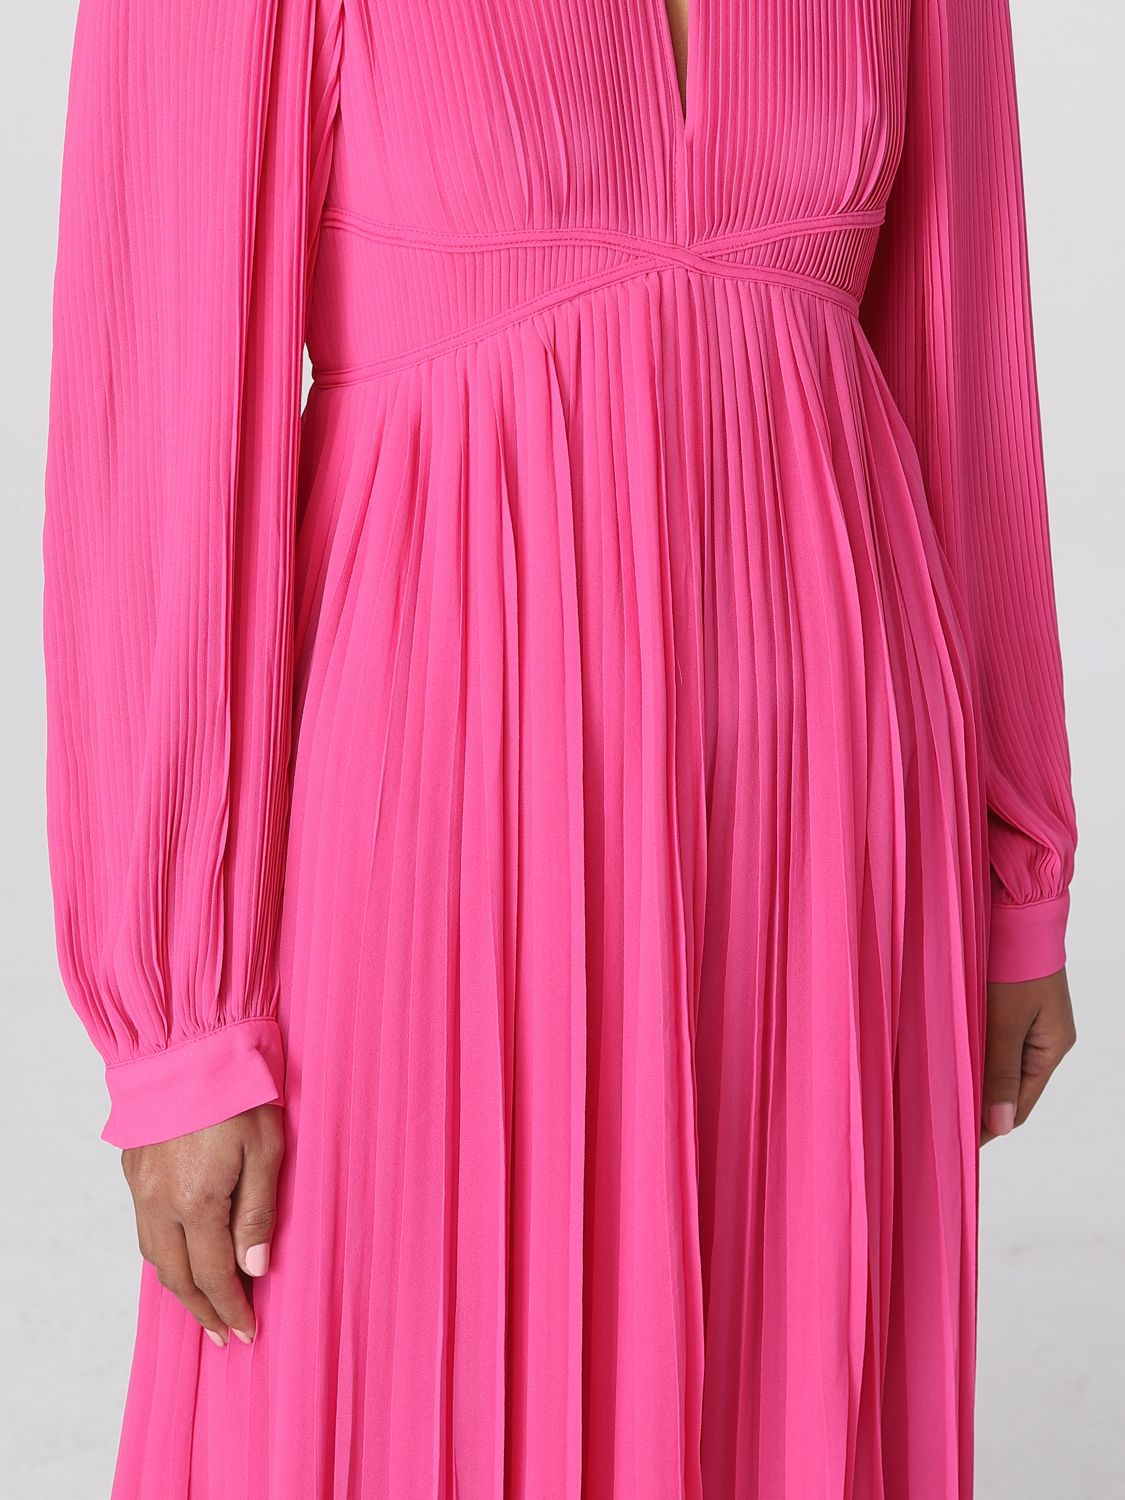 MICHAEL KORS: dress for woman - Cherry | Michael Kors dress MR381FY7R3  online on 